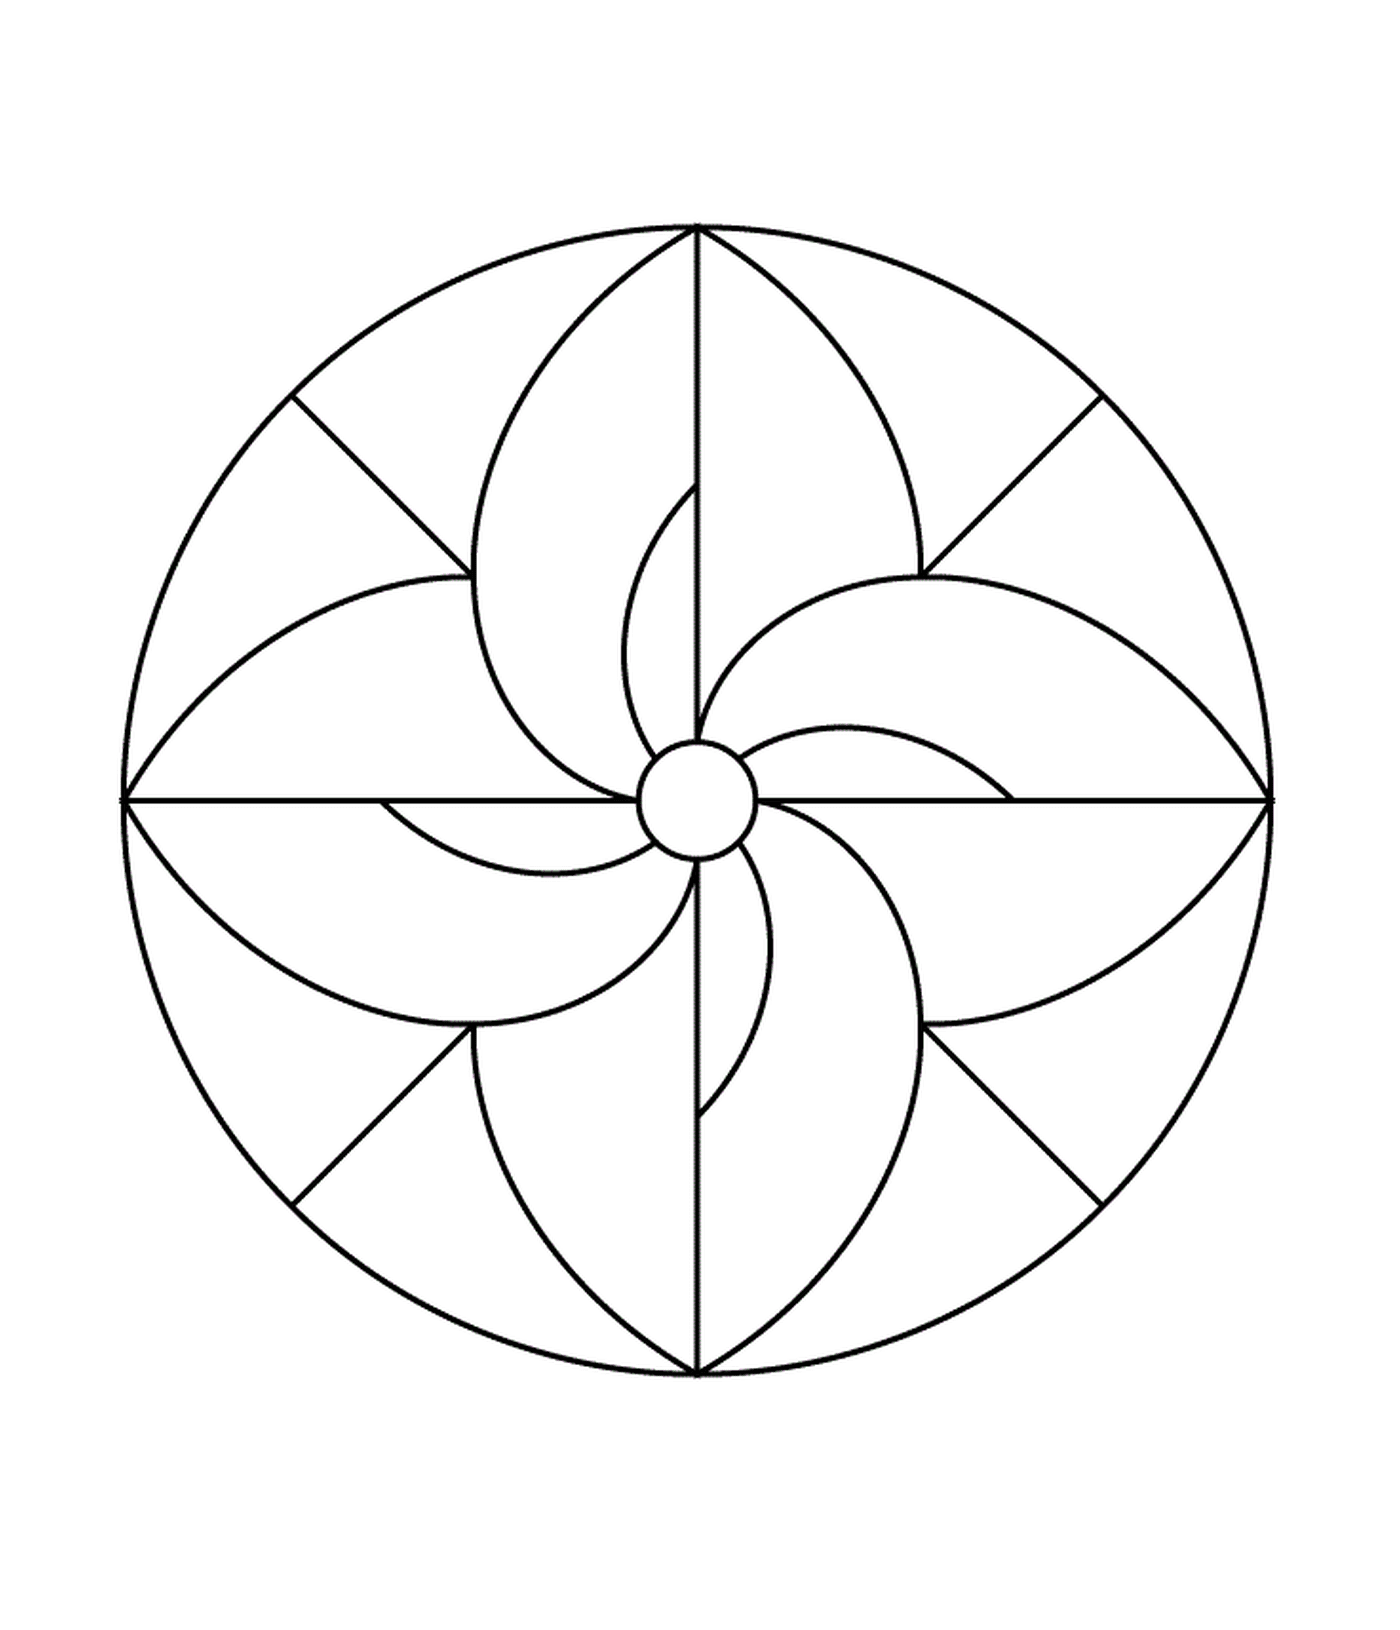   Un motif circulaire 